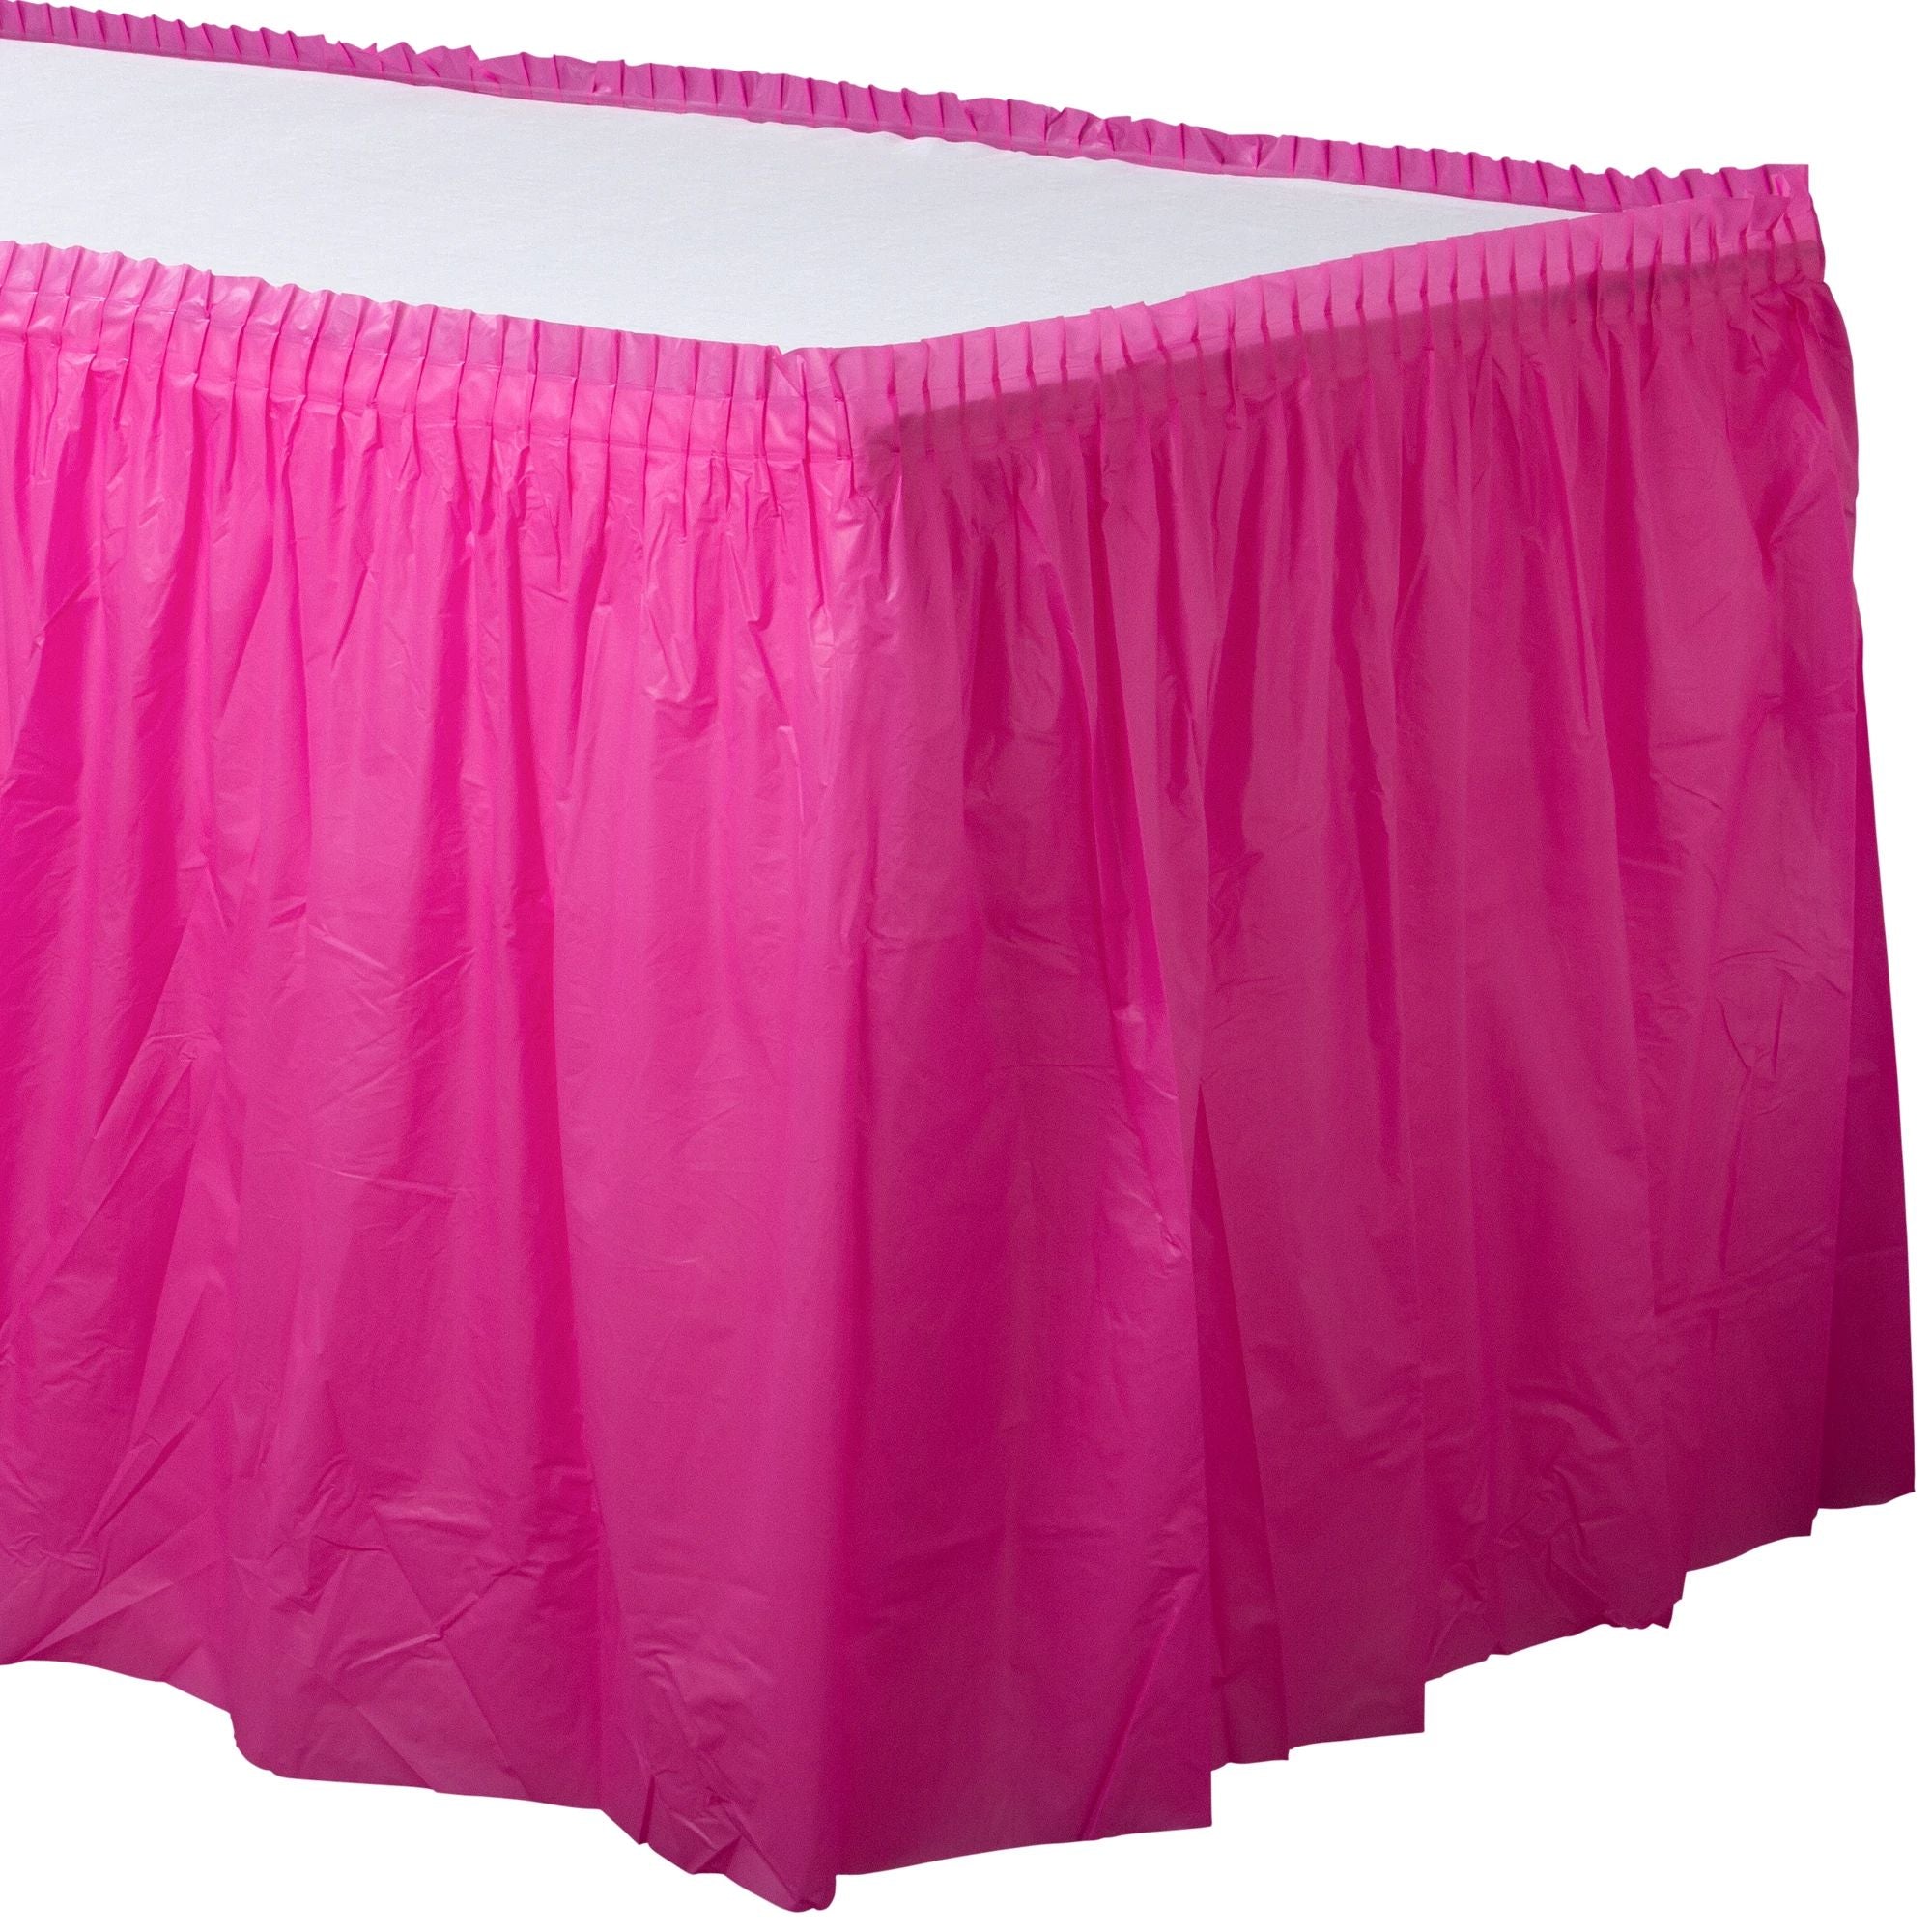 14' x 29" Plastic Table Skirt - Bright Pink